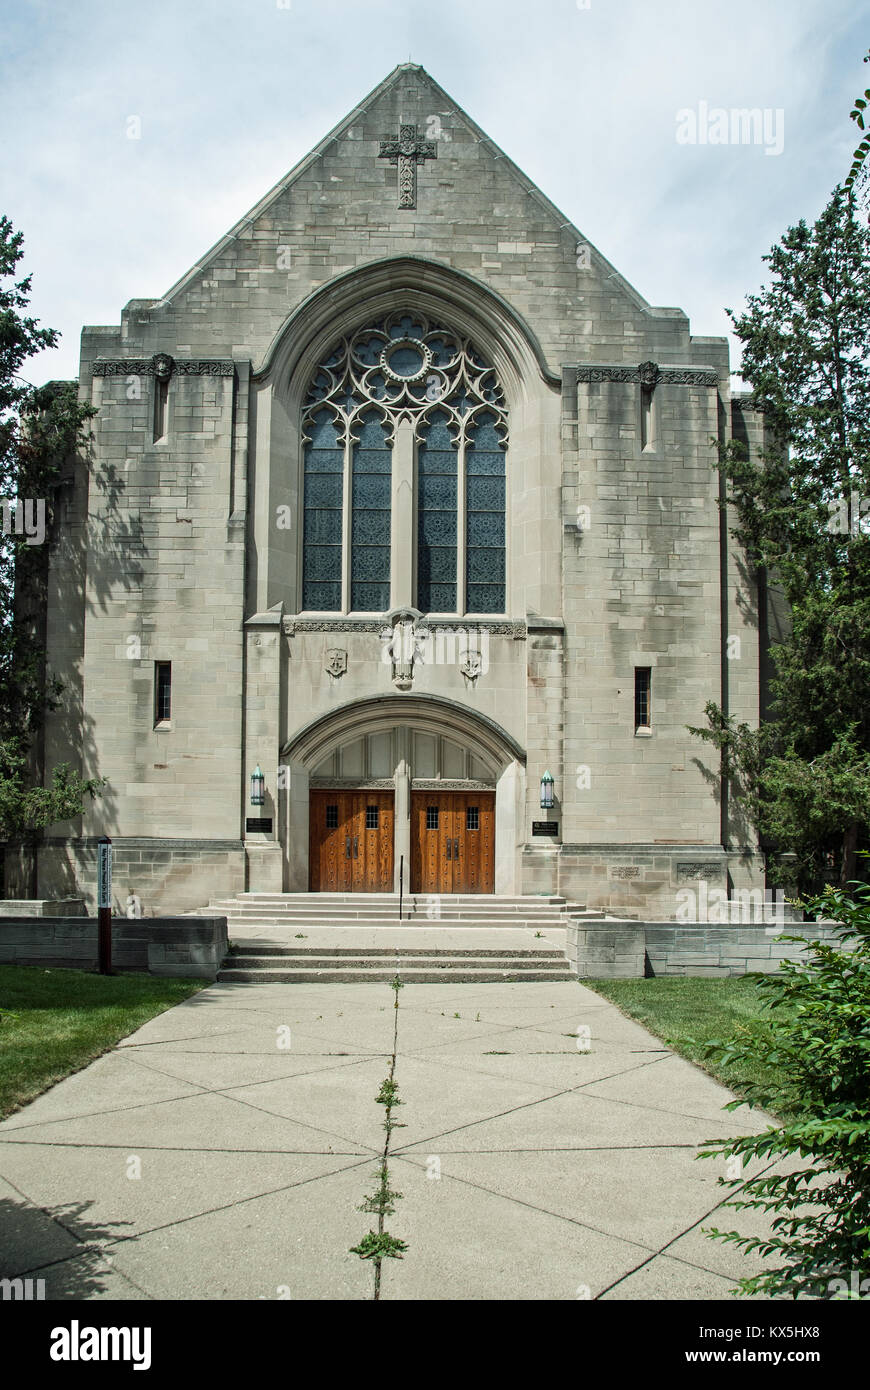 First Methodist Church Ann Arbor Michigan United States of America Stock Photo